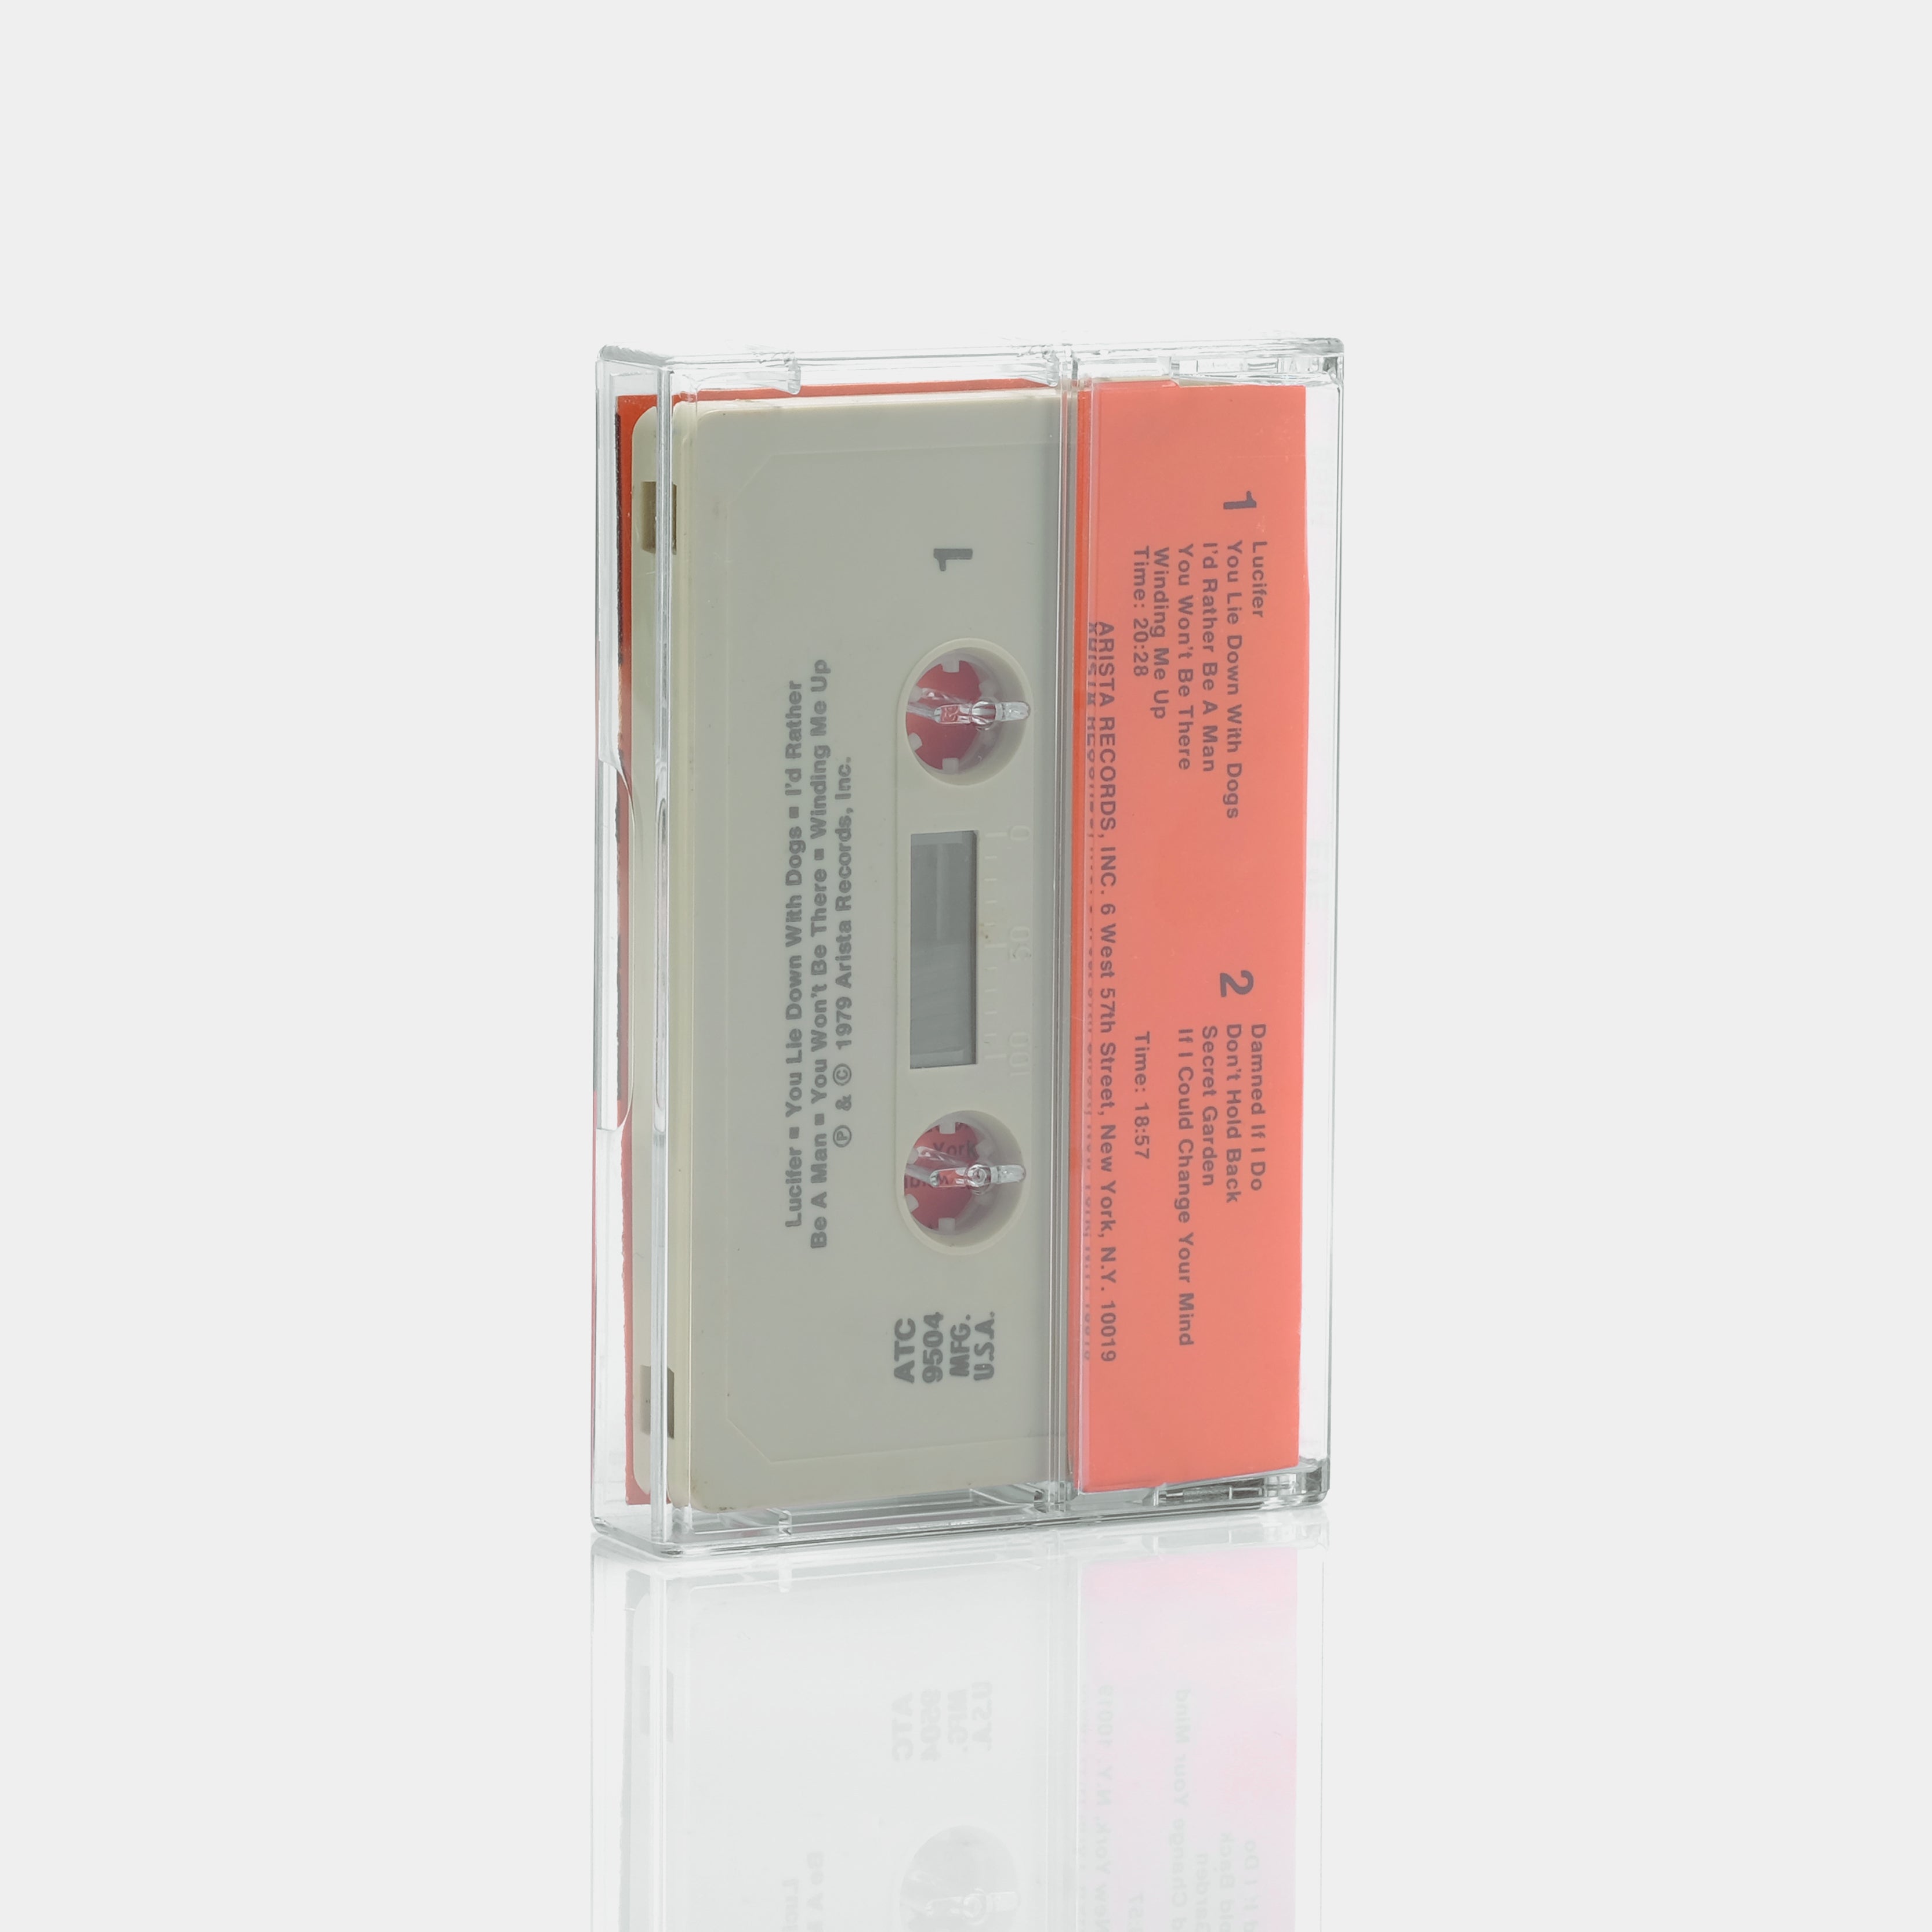 The Alan Parsons Project - Eve ‎Cassette Tape